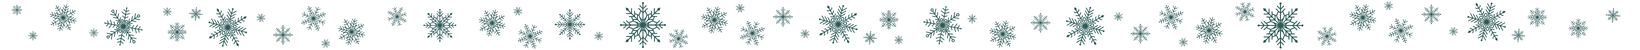 corolla christmas village snowflakes